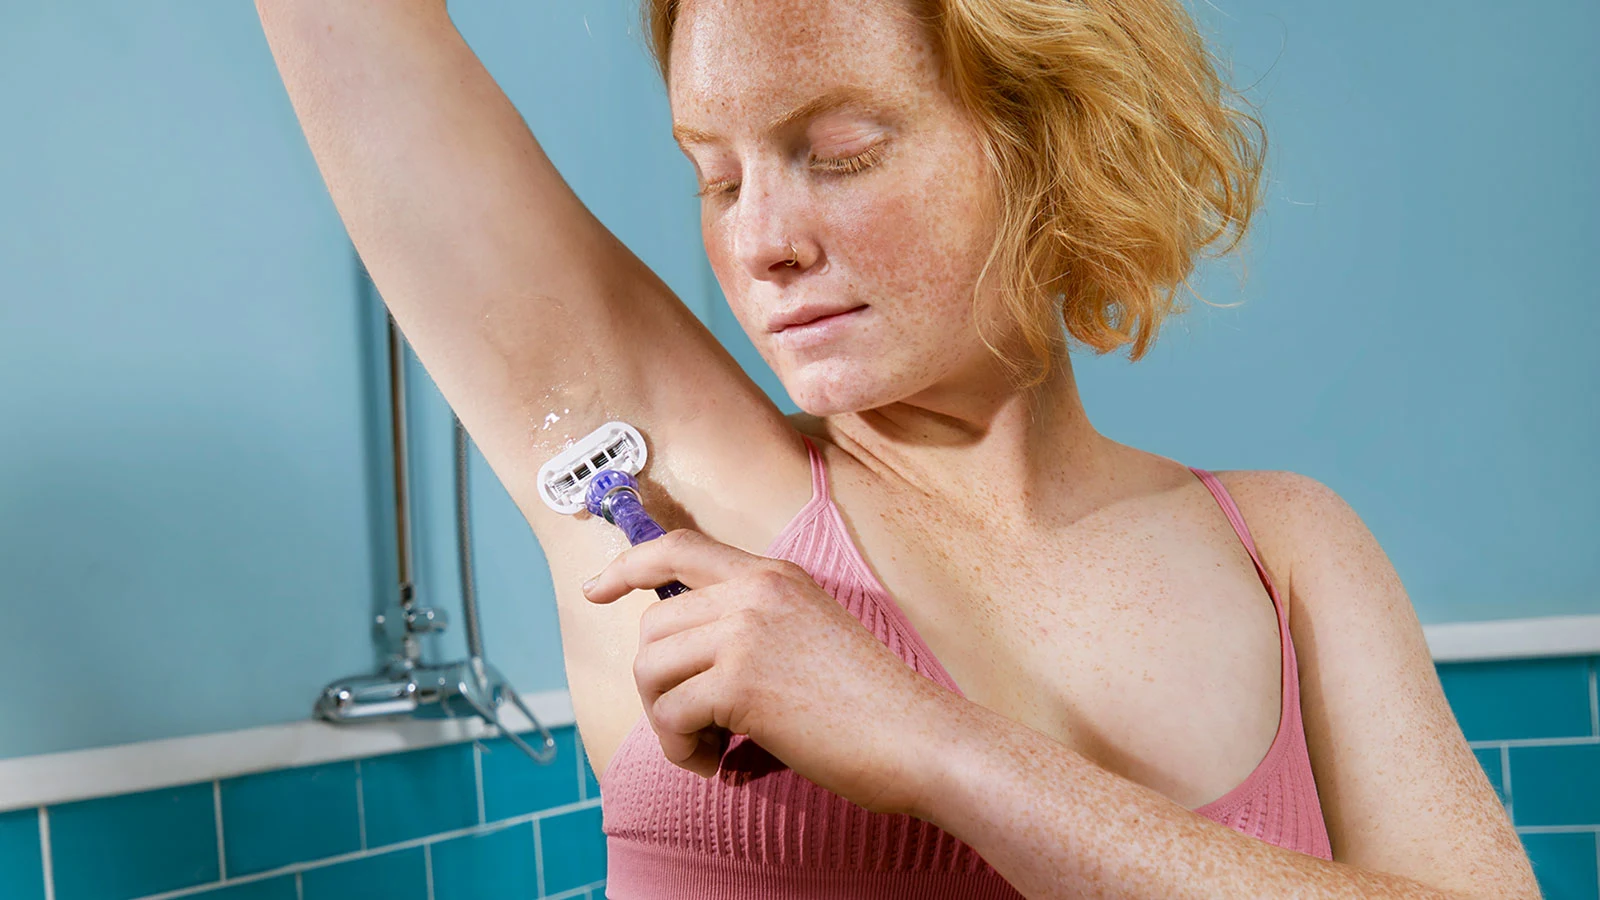 Woman shaving her underarm with a razor in a bathroom